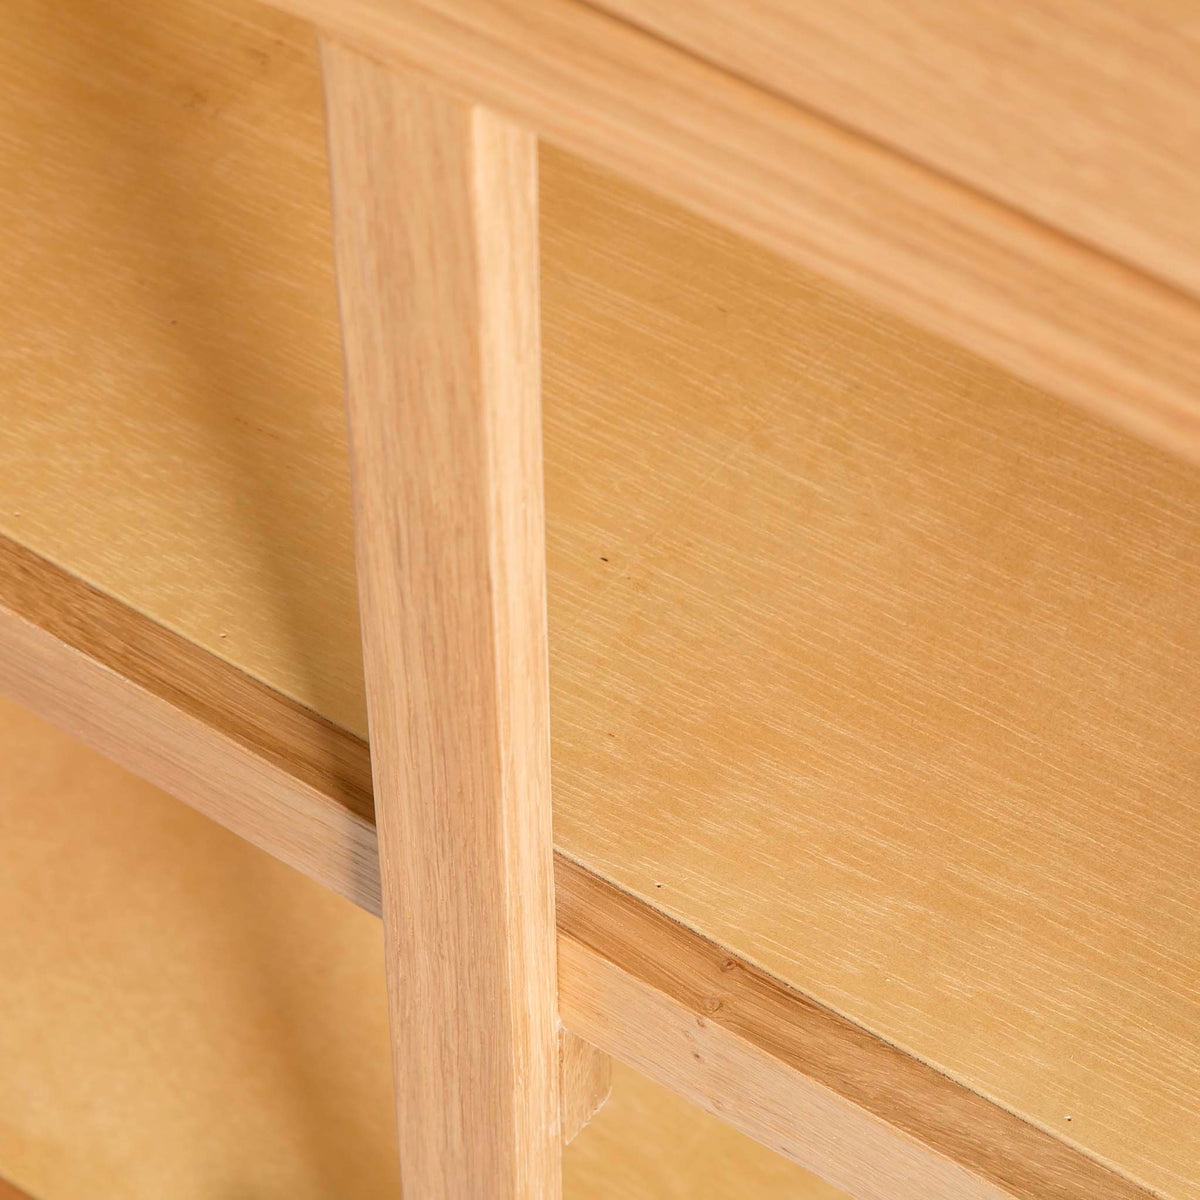  Abbey Light Oak Small Sideboard Cabinet  - Close up of inside sideboard shelves